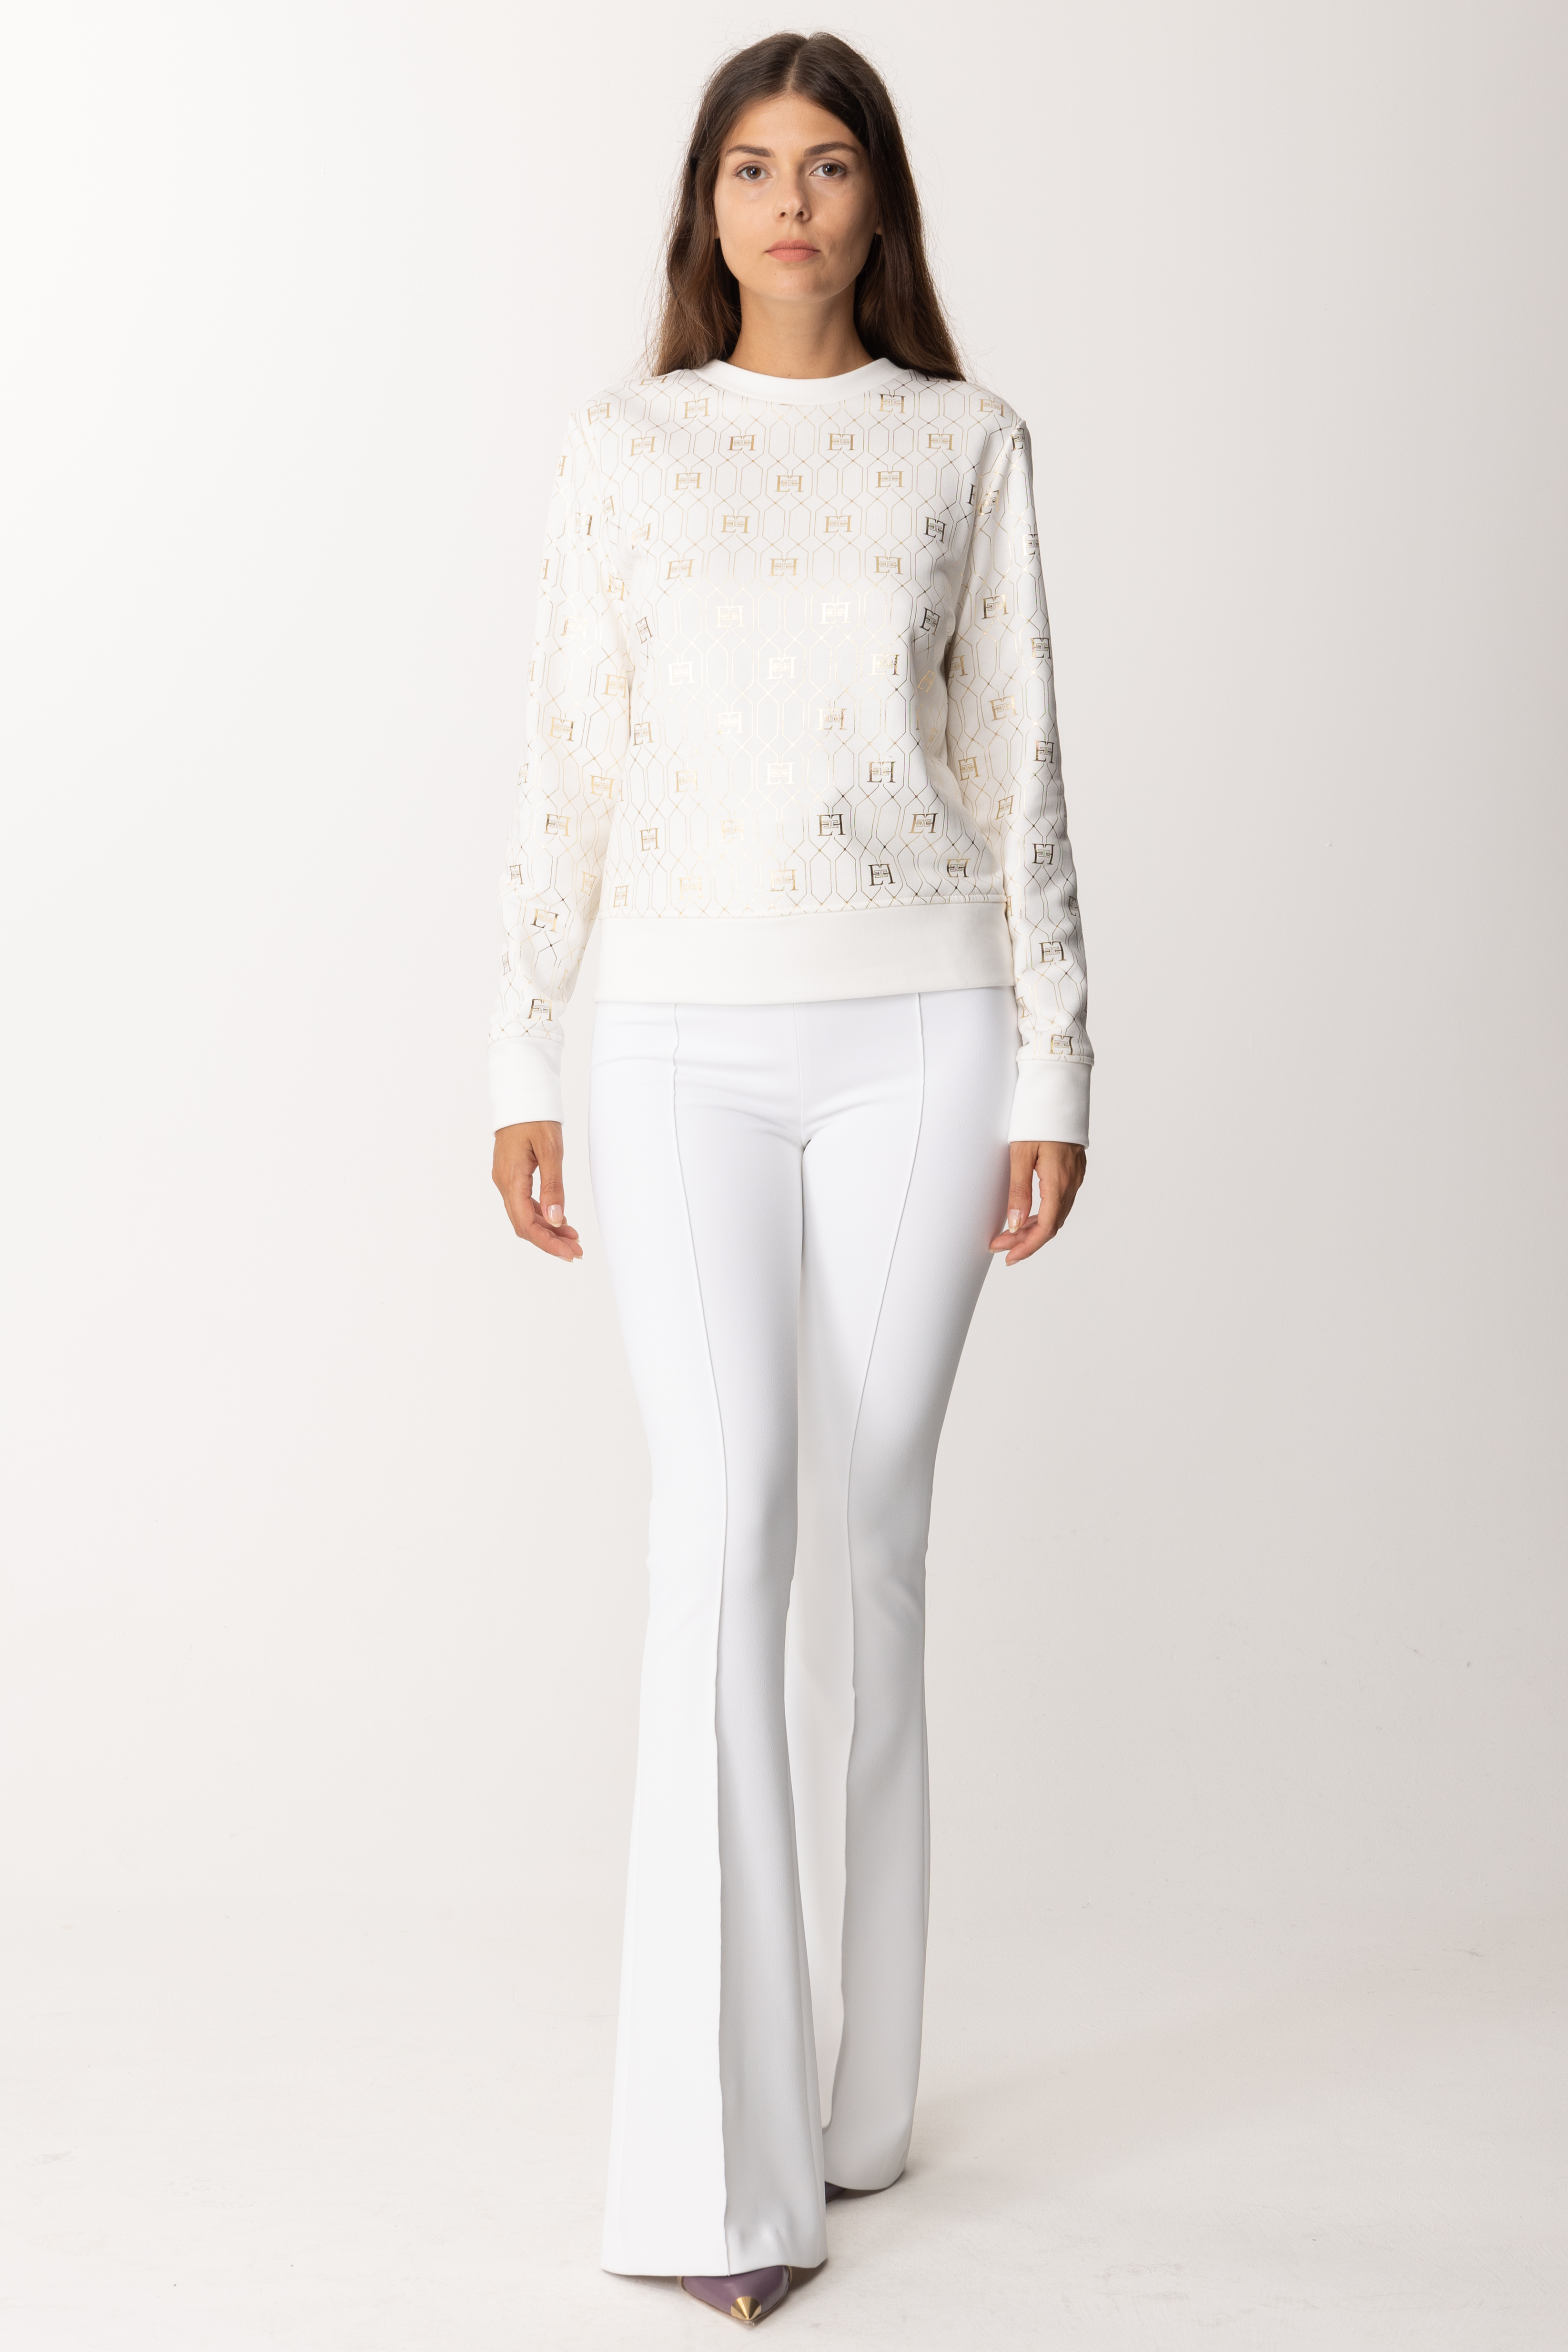 Vista previa: Elisabetta Franchi Jersey de algodón con logo decorativo Avorio